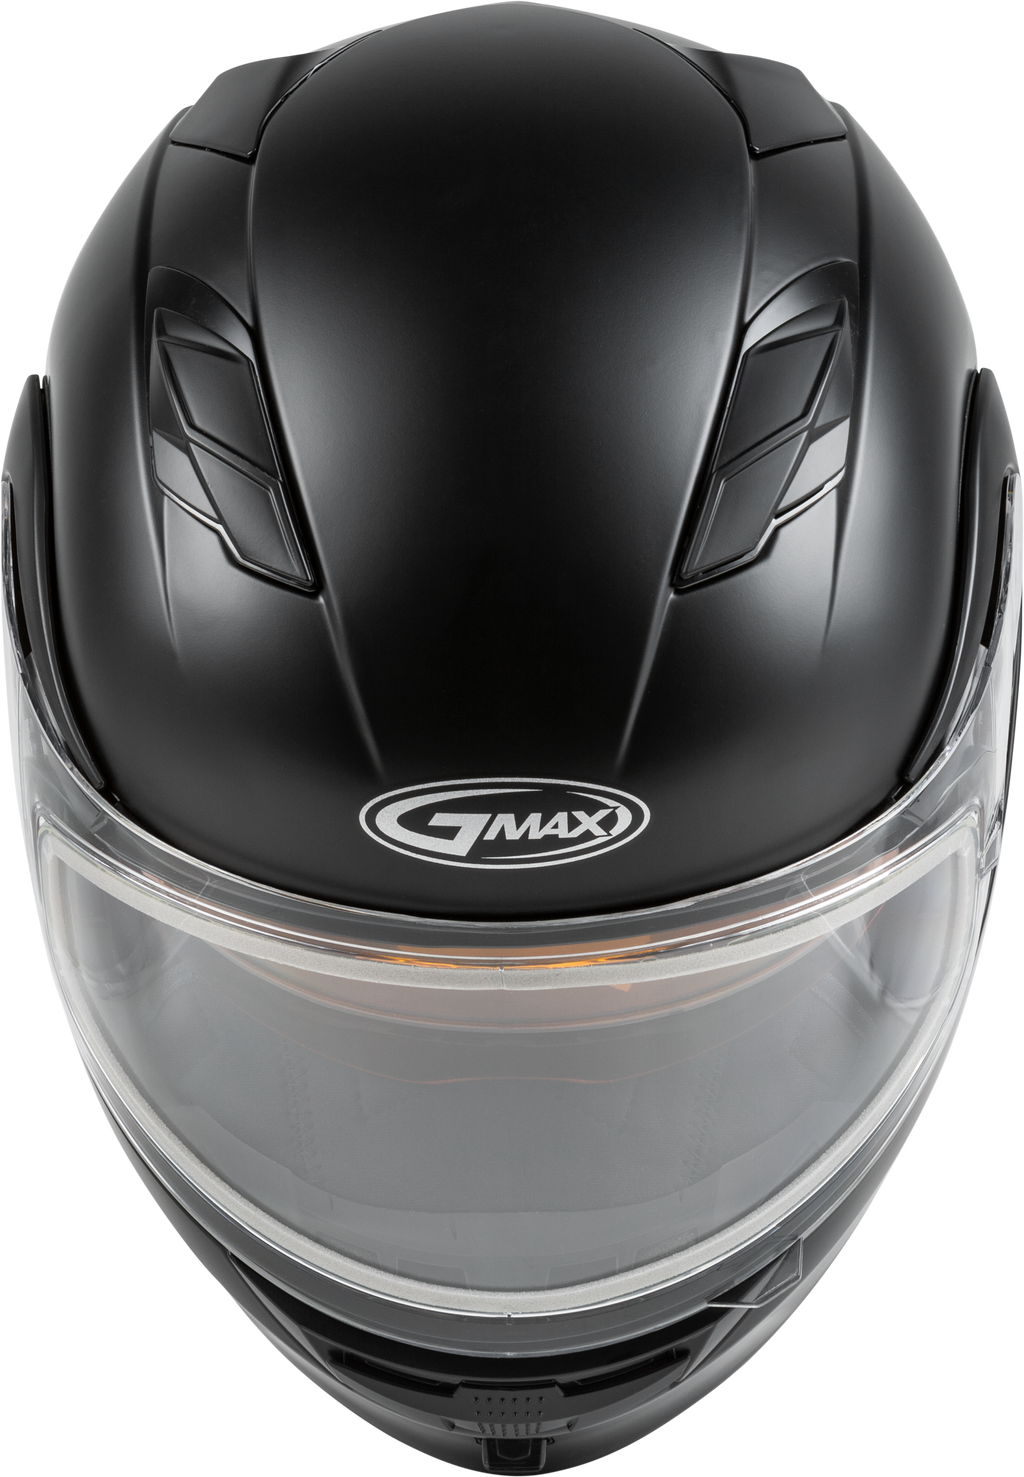 Md 01s Modular Snow Helmet Matte Black Xs